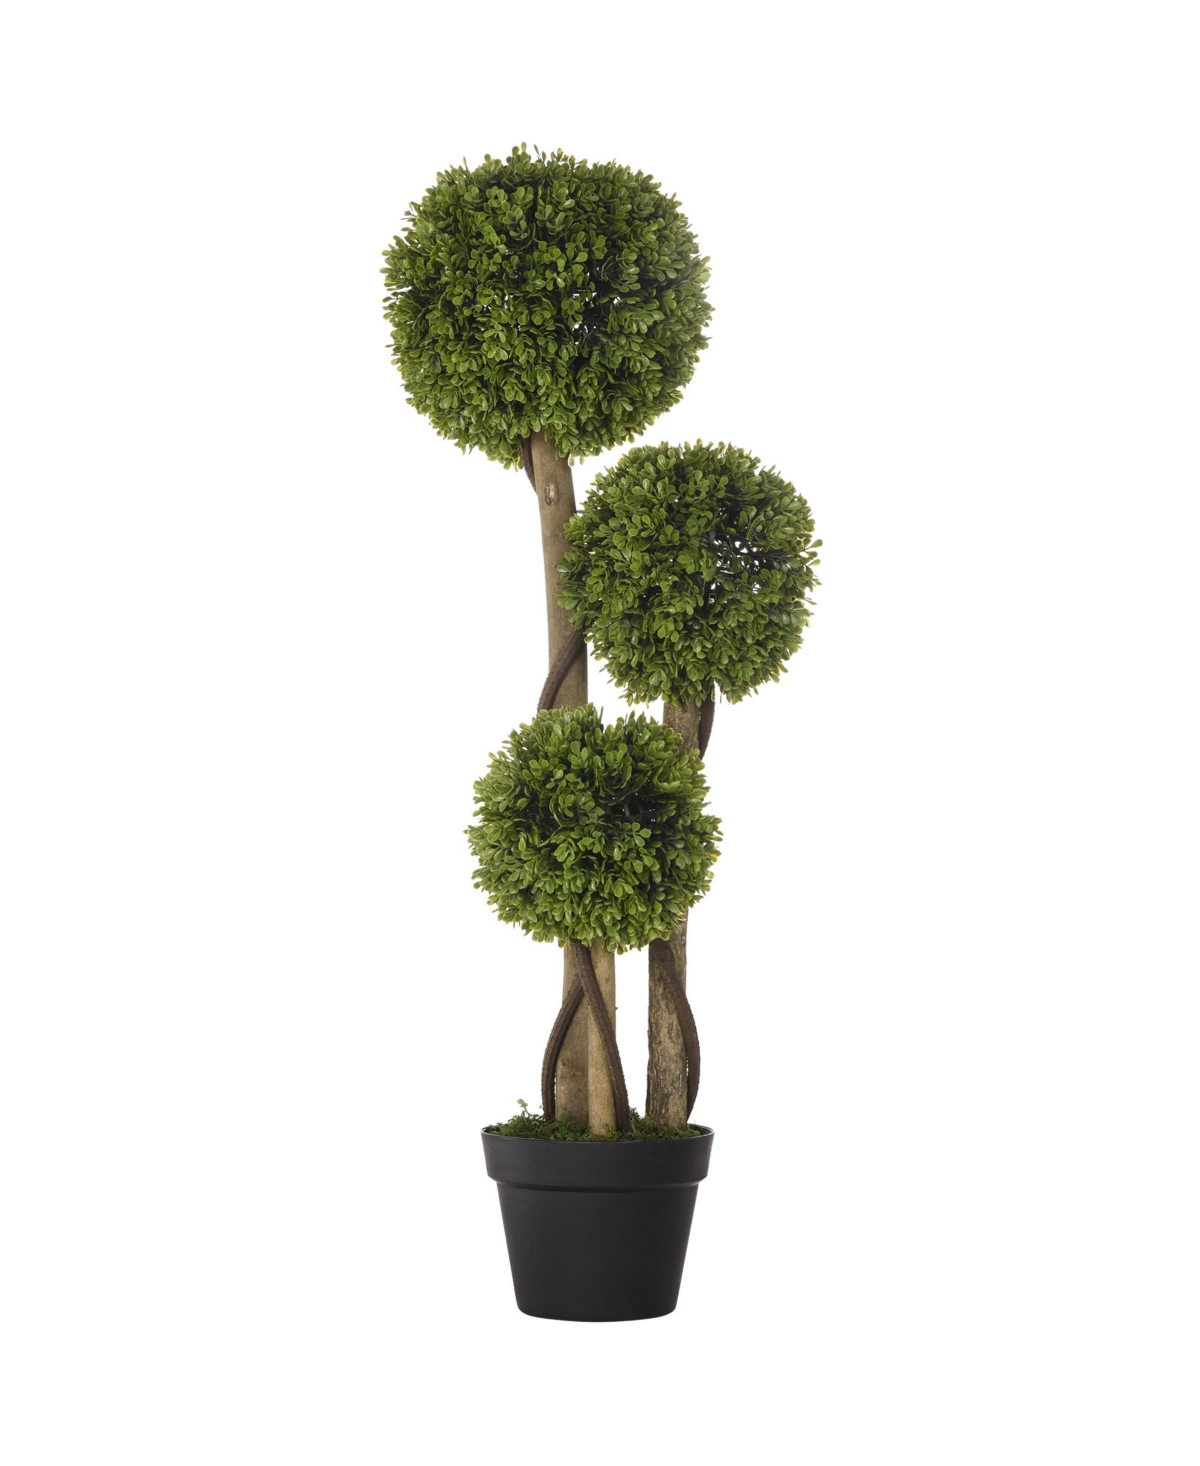 35.5" Indoor & Outdoor Fake Plant Artificial Tree in Pot - Green